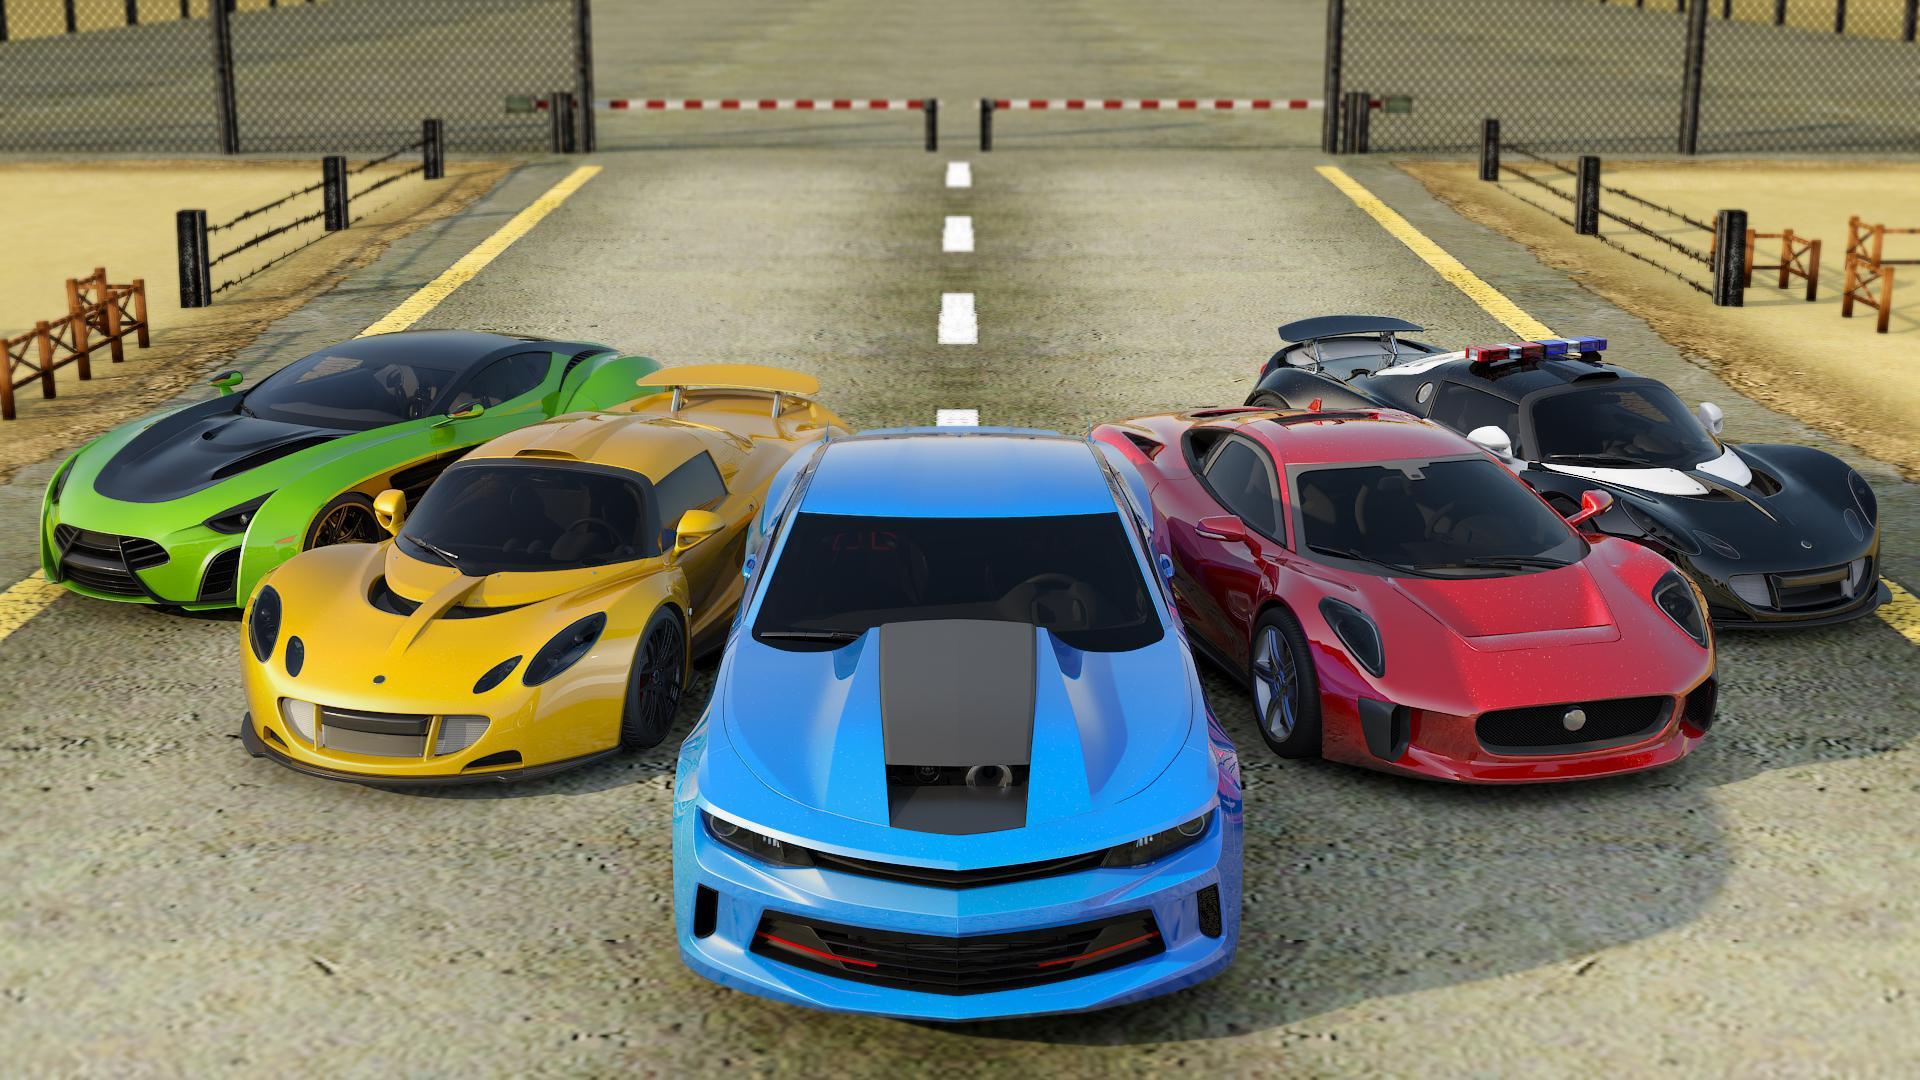 Cars speed racing. Car Racing игра. Cars 2006 game. Тачки игра 2006. Car Racing игра 2016.